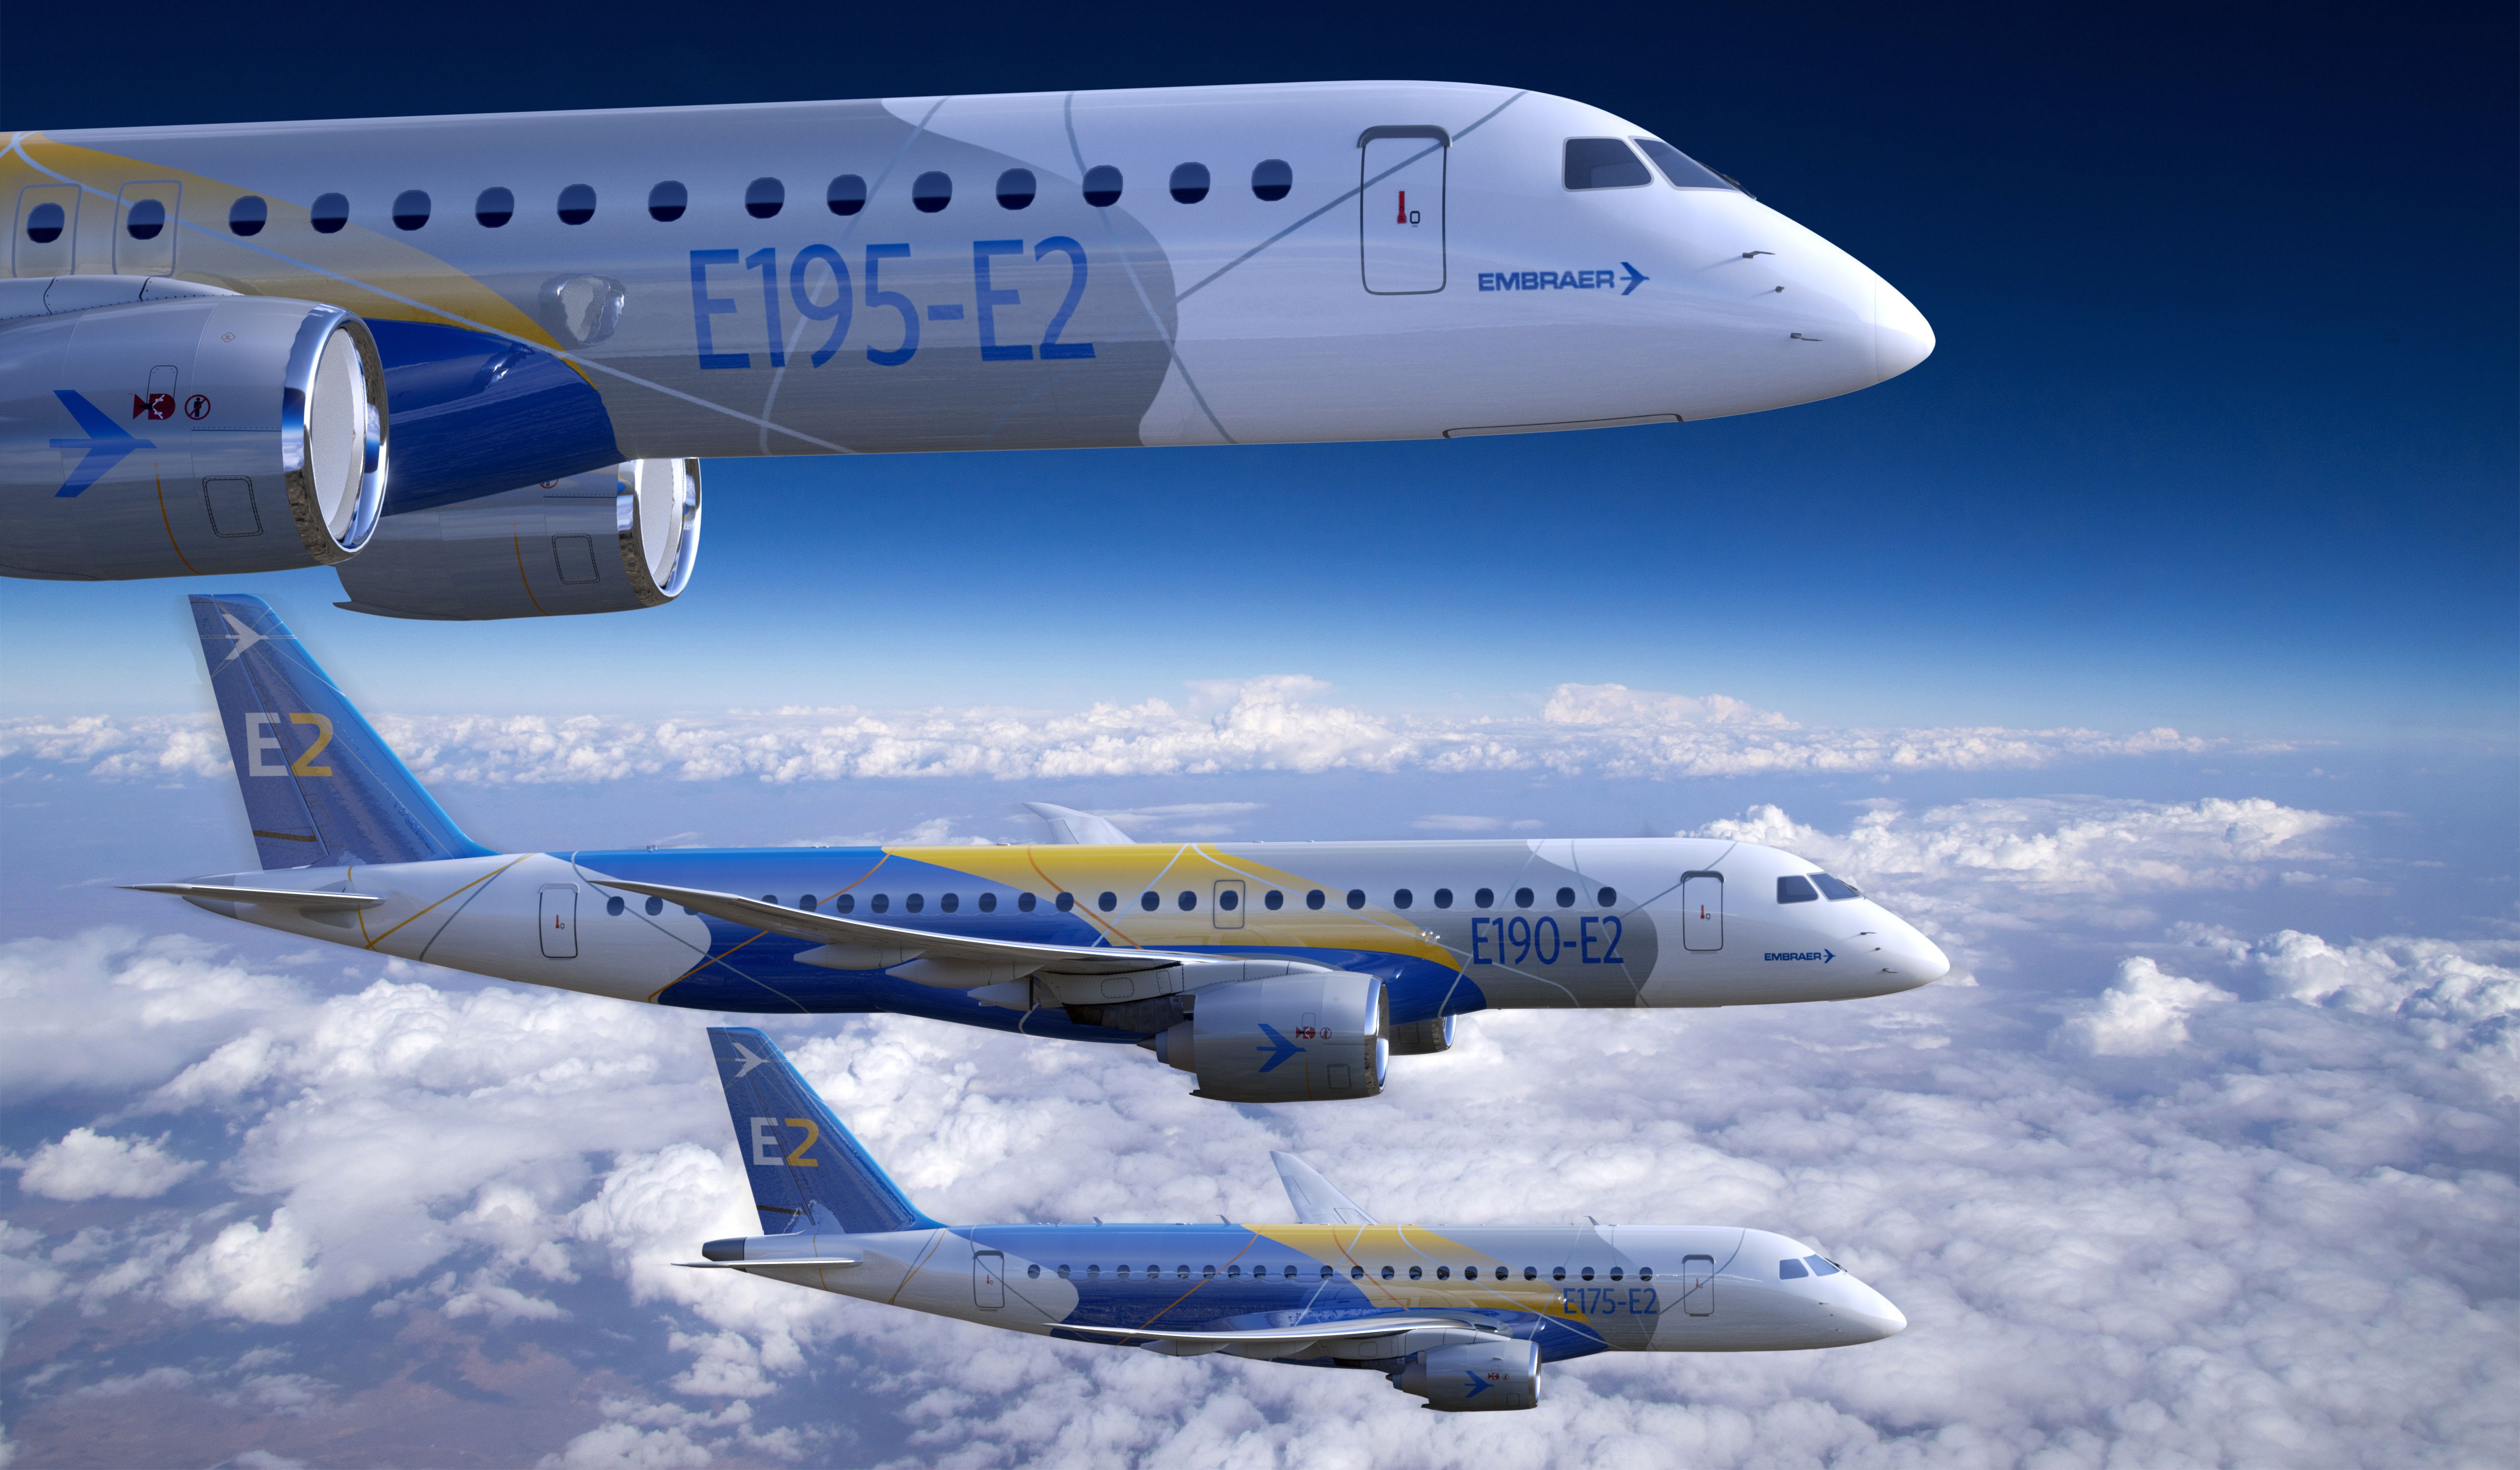 Renderings of Embraer E2 jets flying